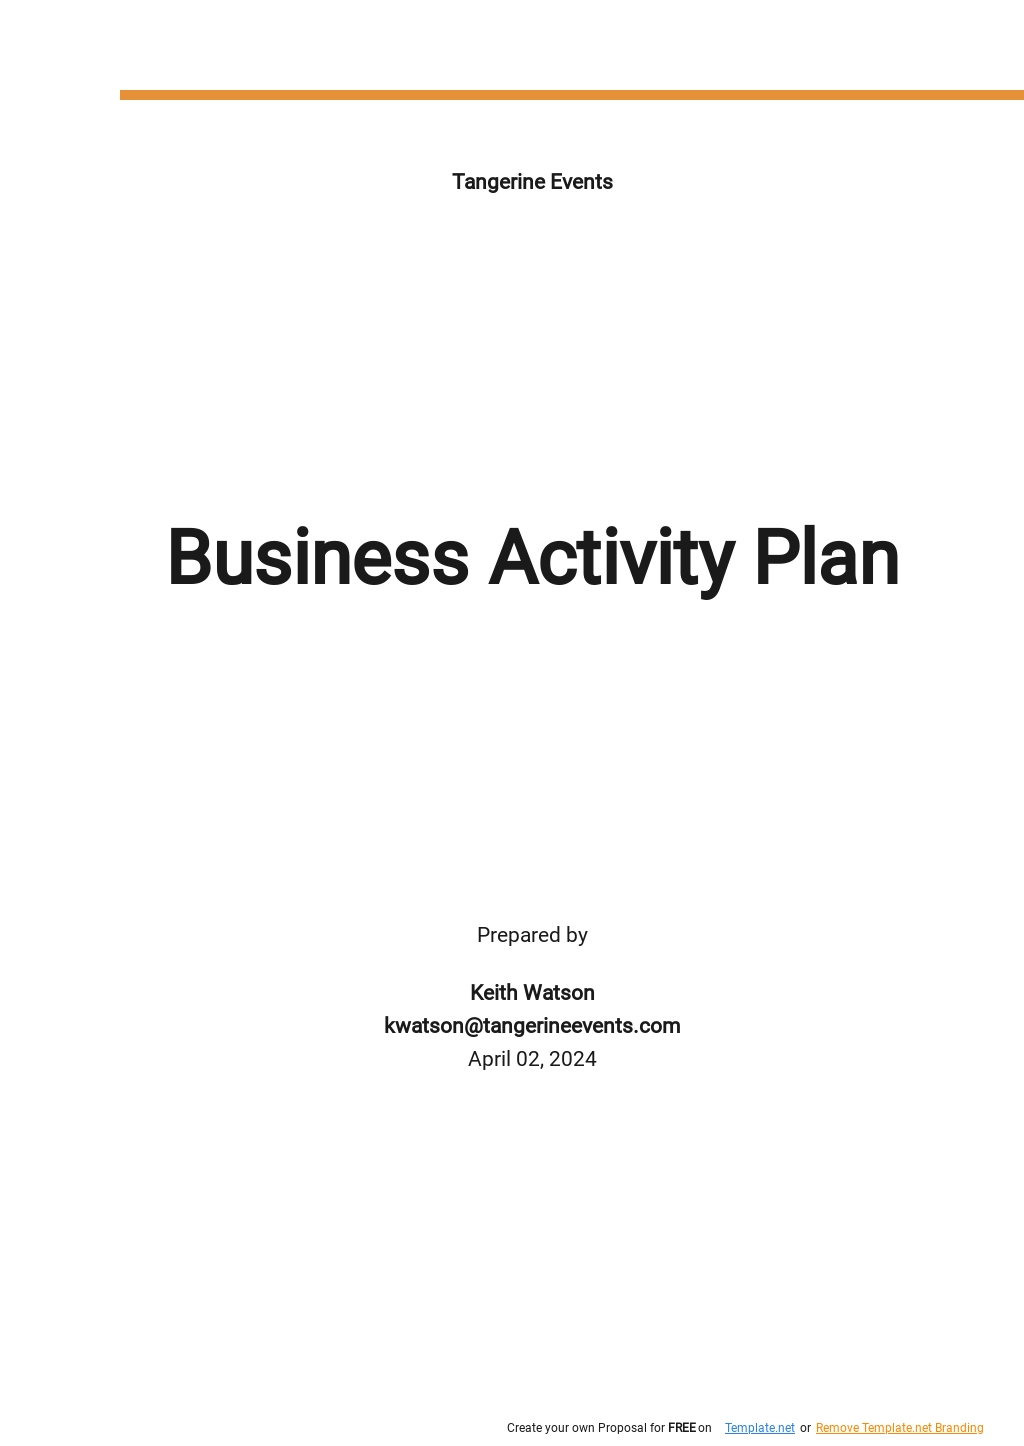 Sample Business Activity Plan Template.jpe